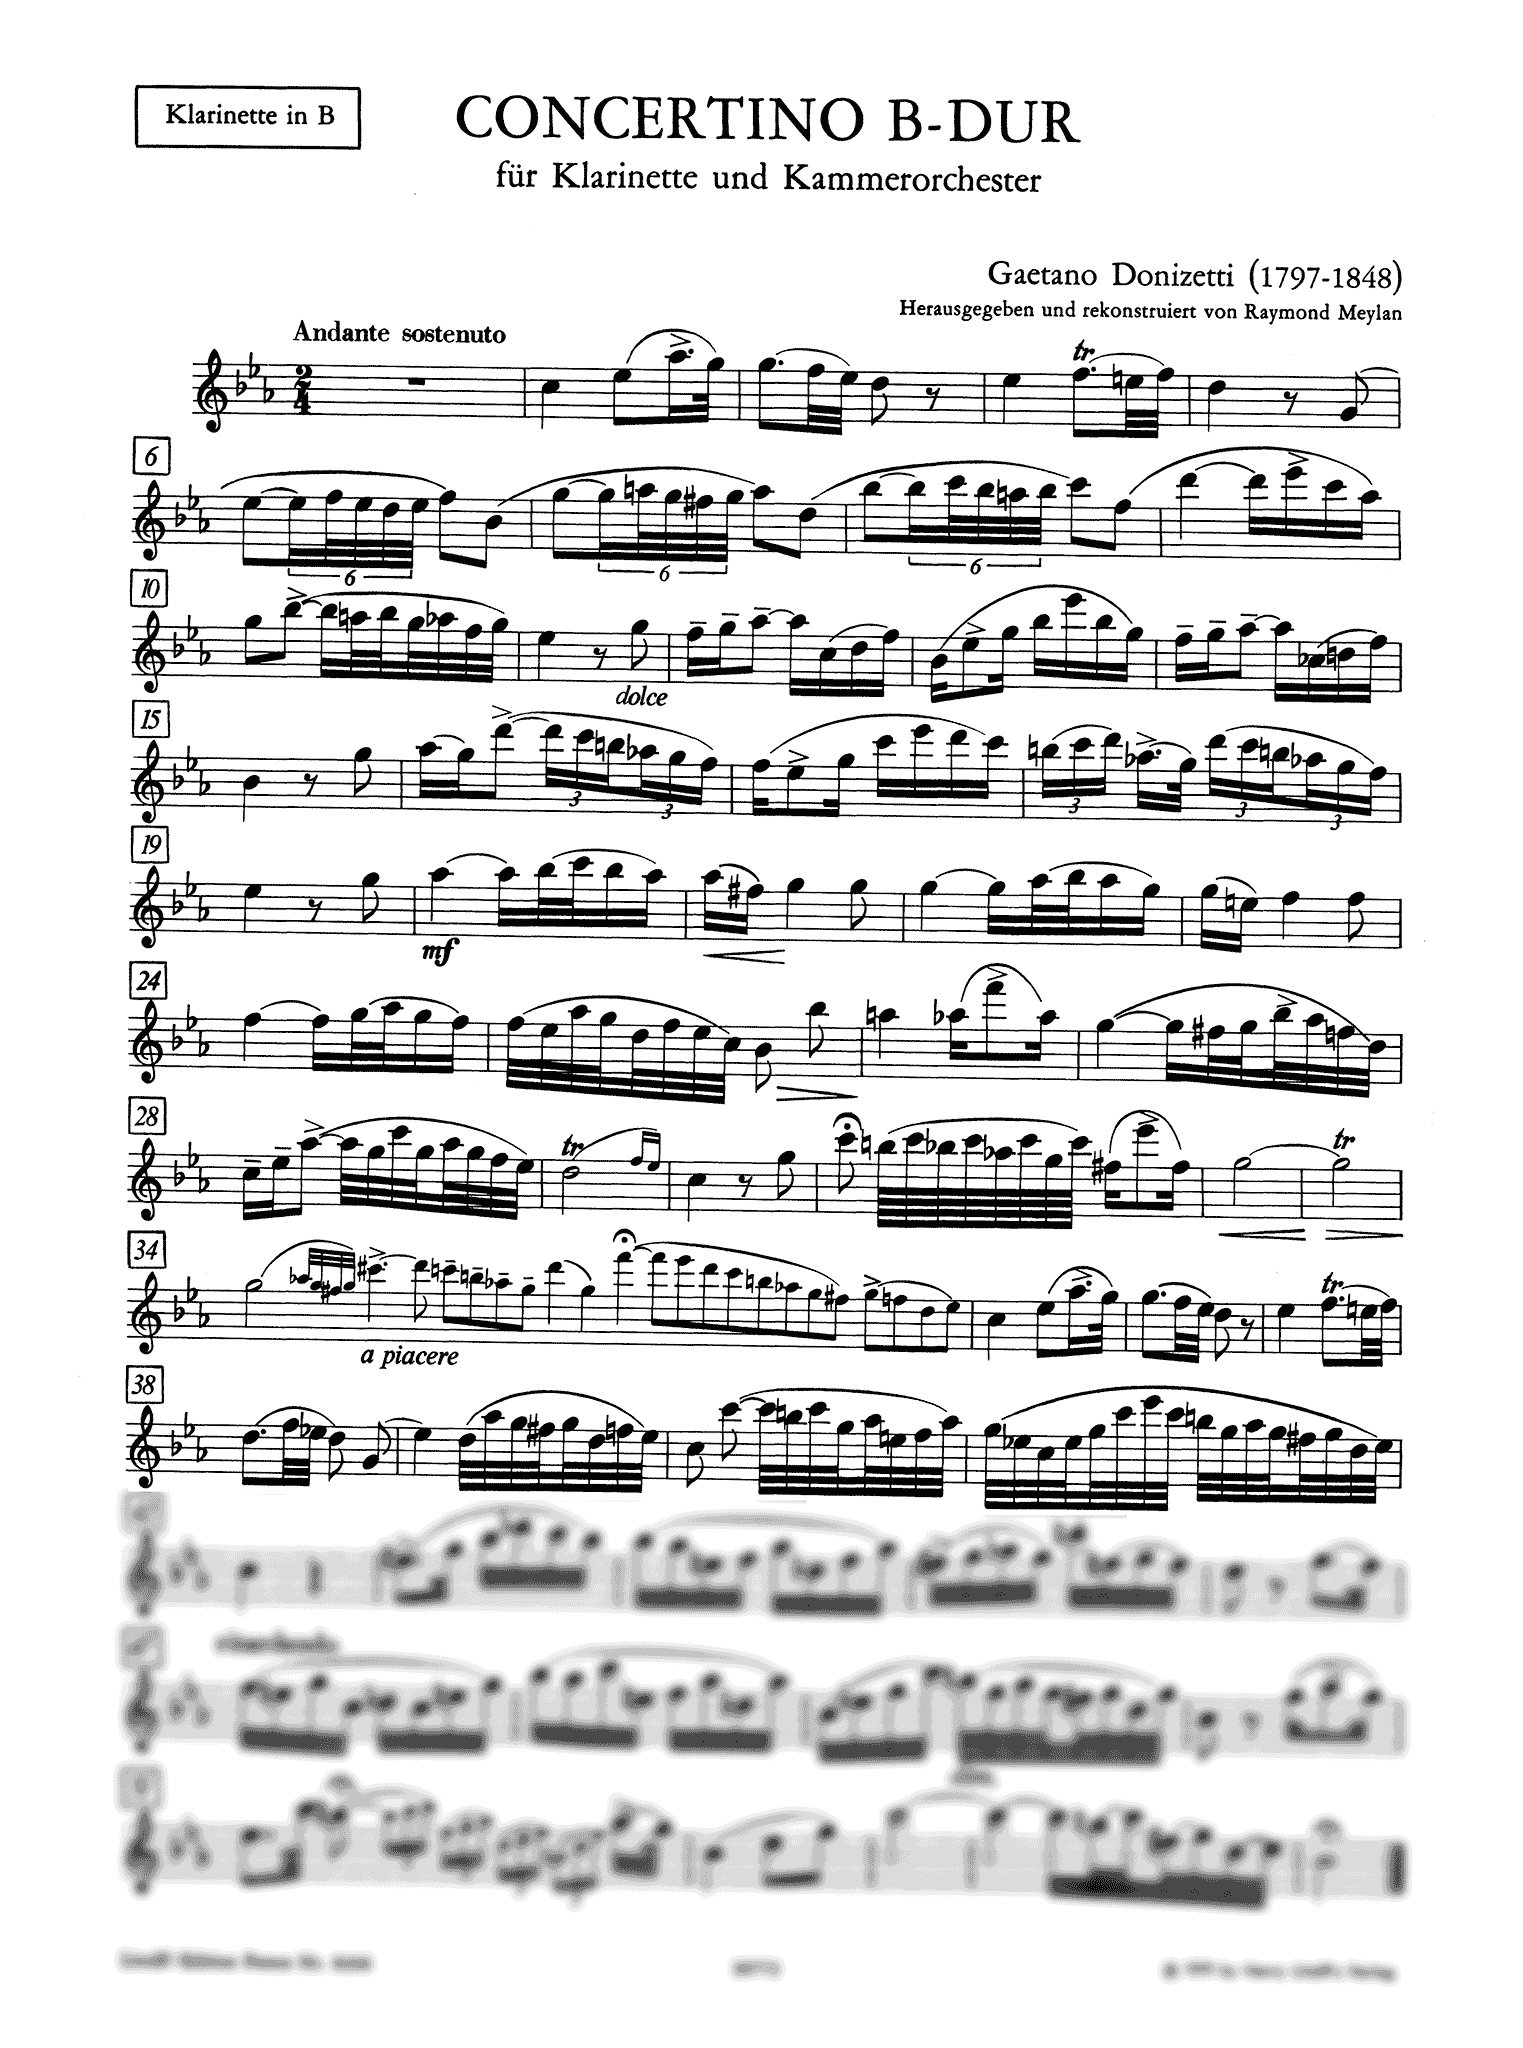 Donizetti Concertino in B-flat Major clarinet part